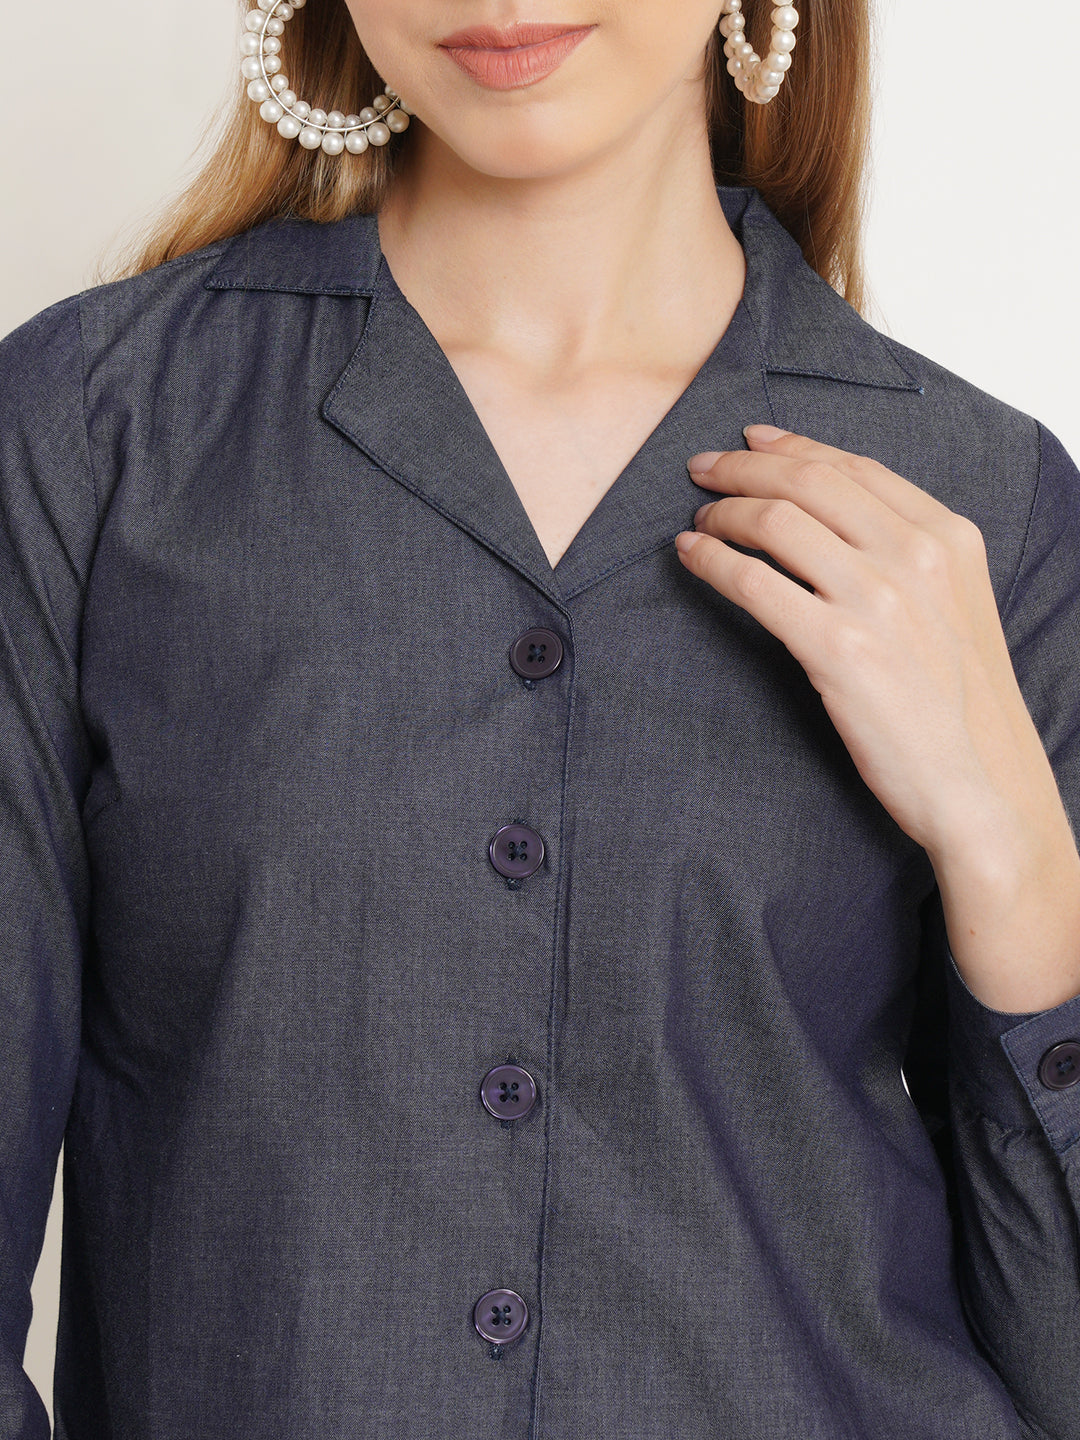 Women Navy Blue Solid Denim Shirt Style Top